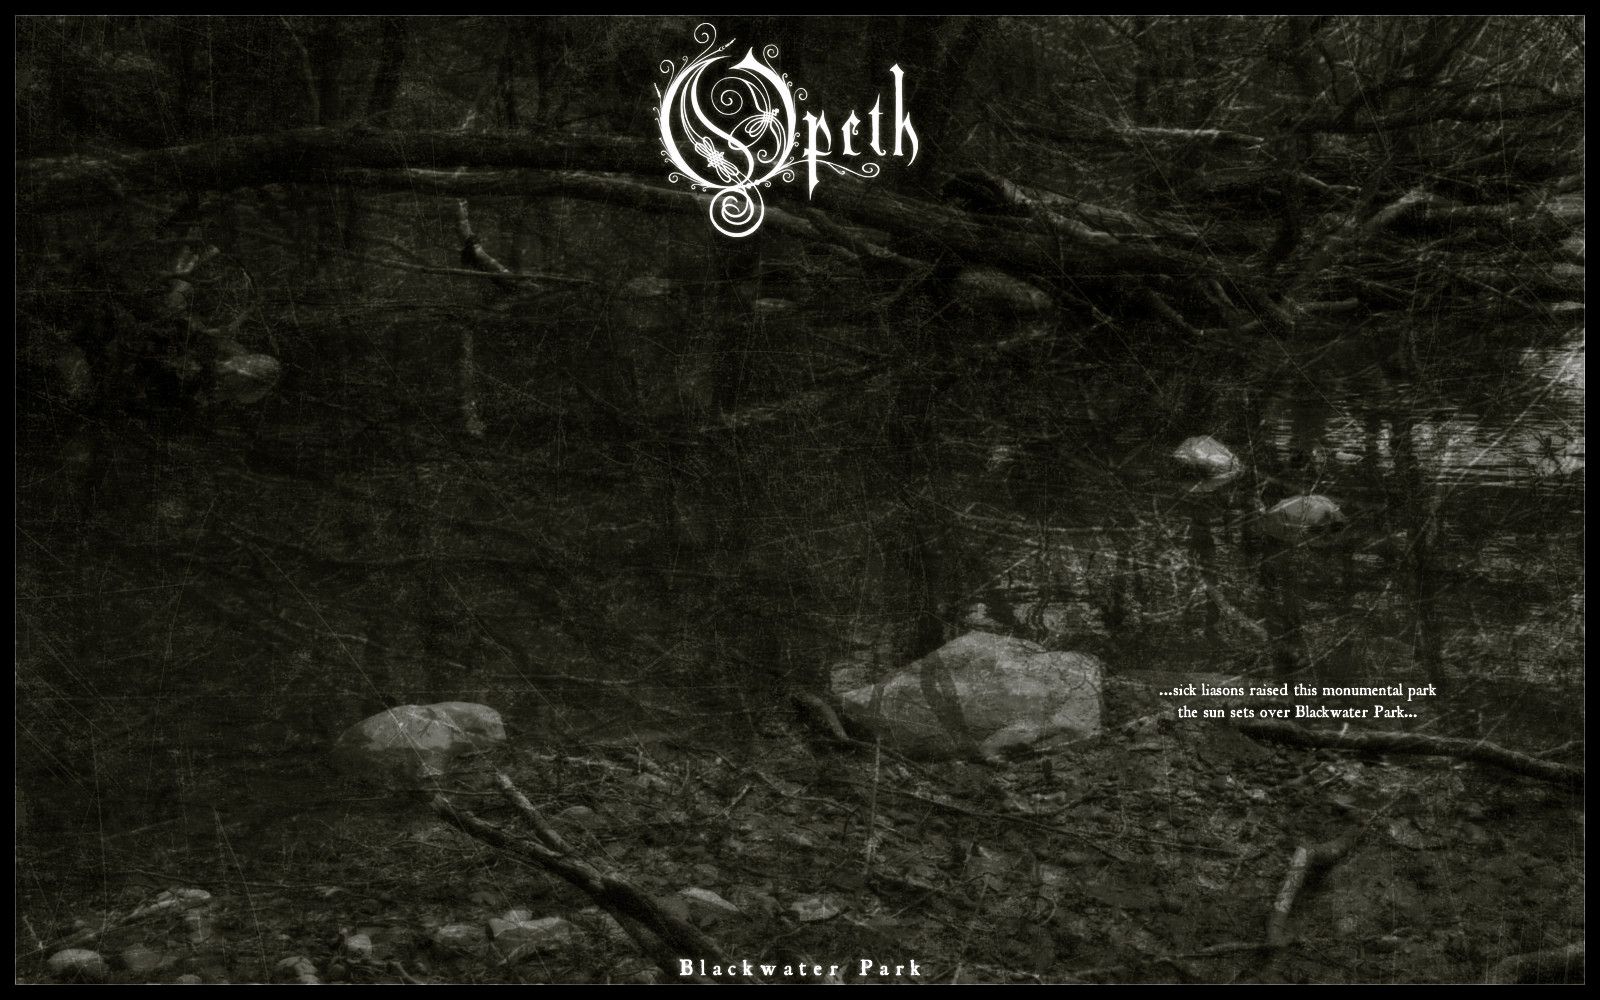 Amazing Opeths Blackwater Park Wallpaper, too bad the lyrics